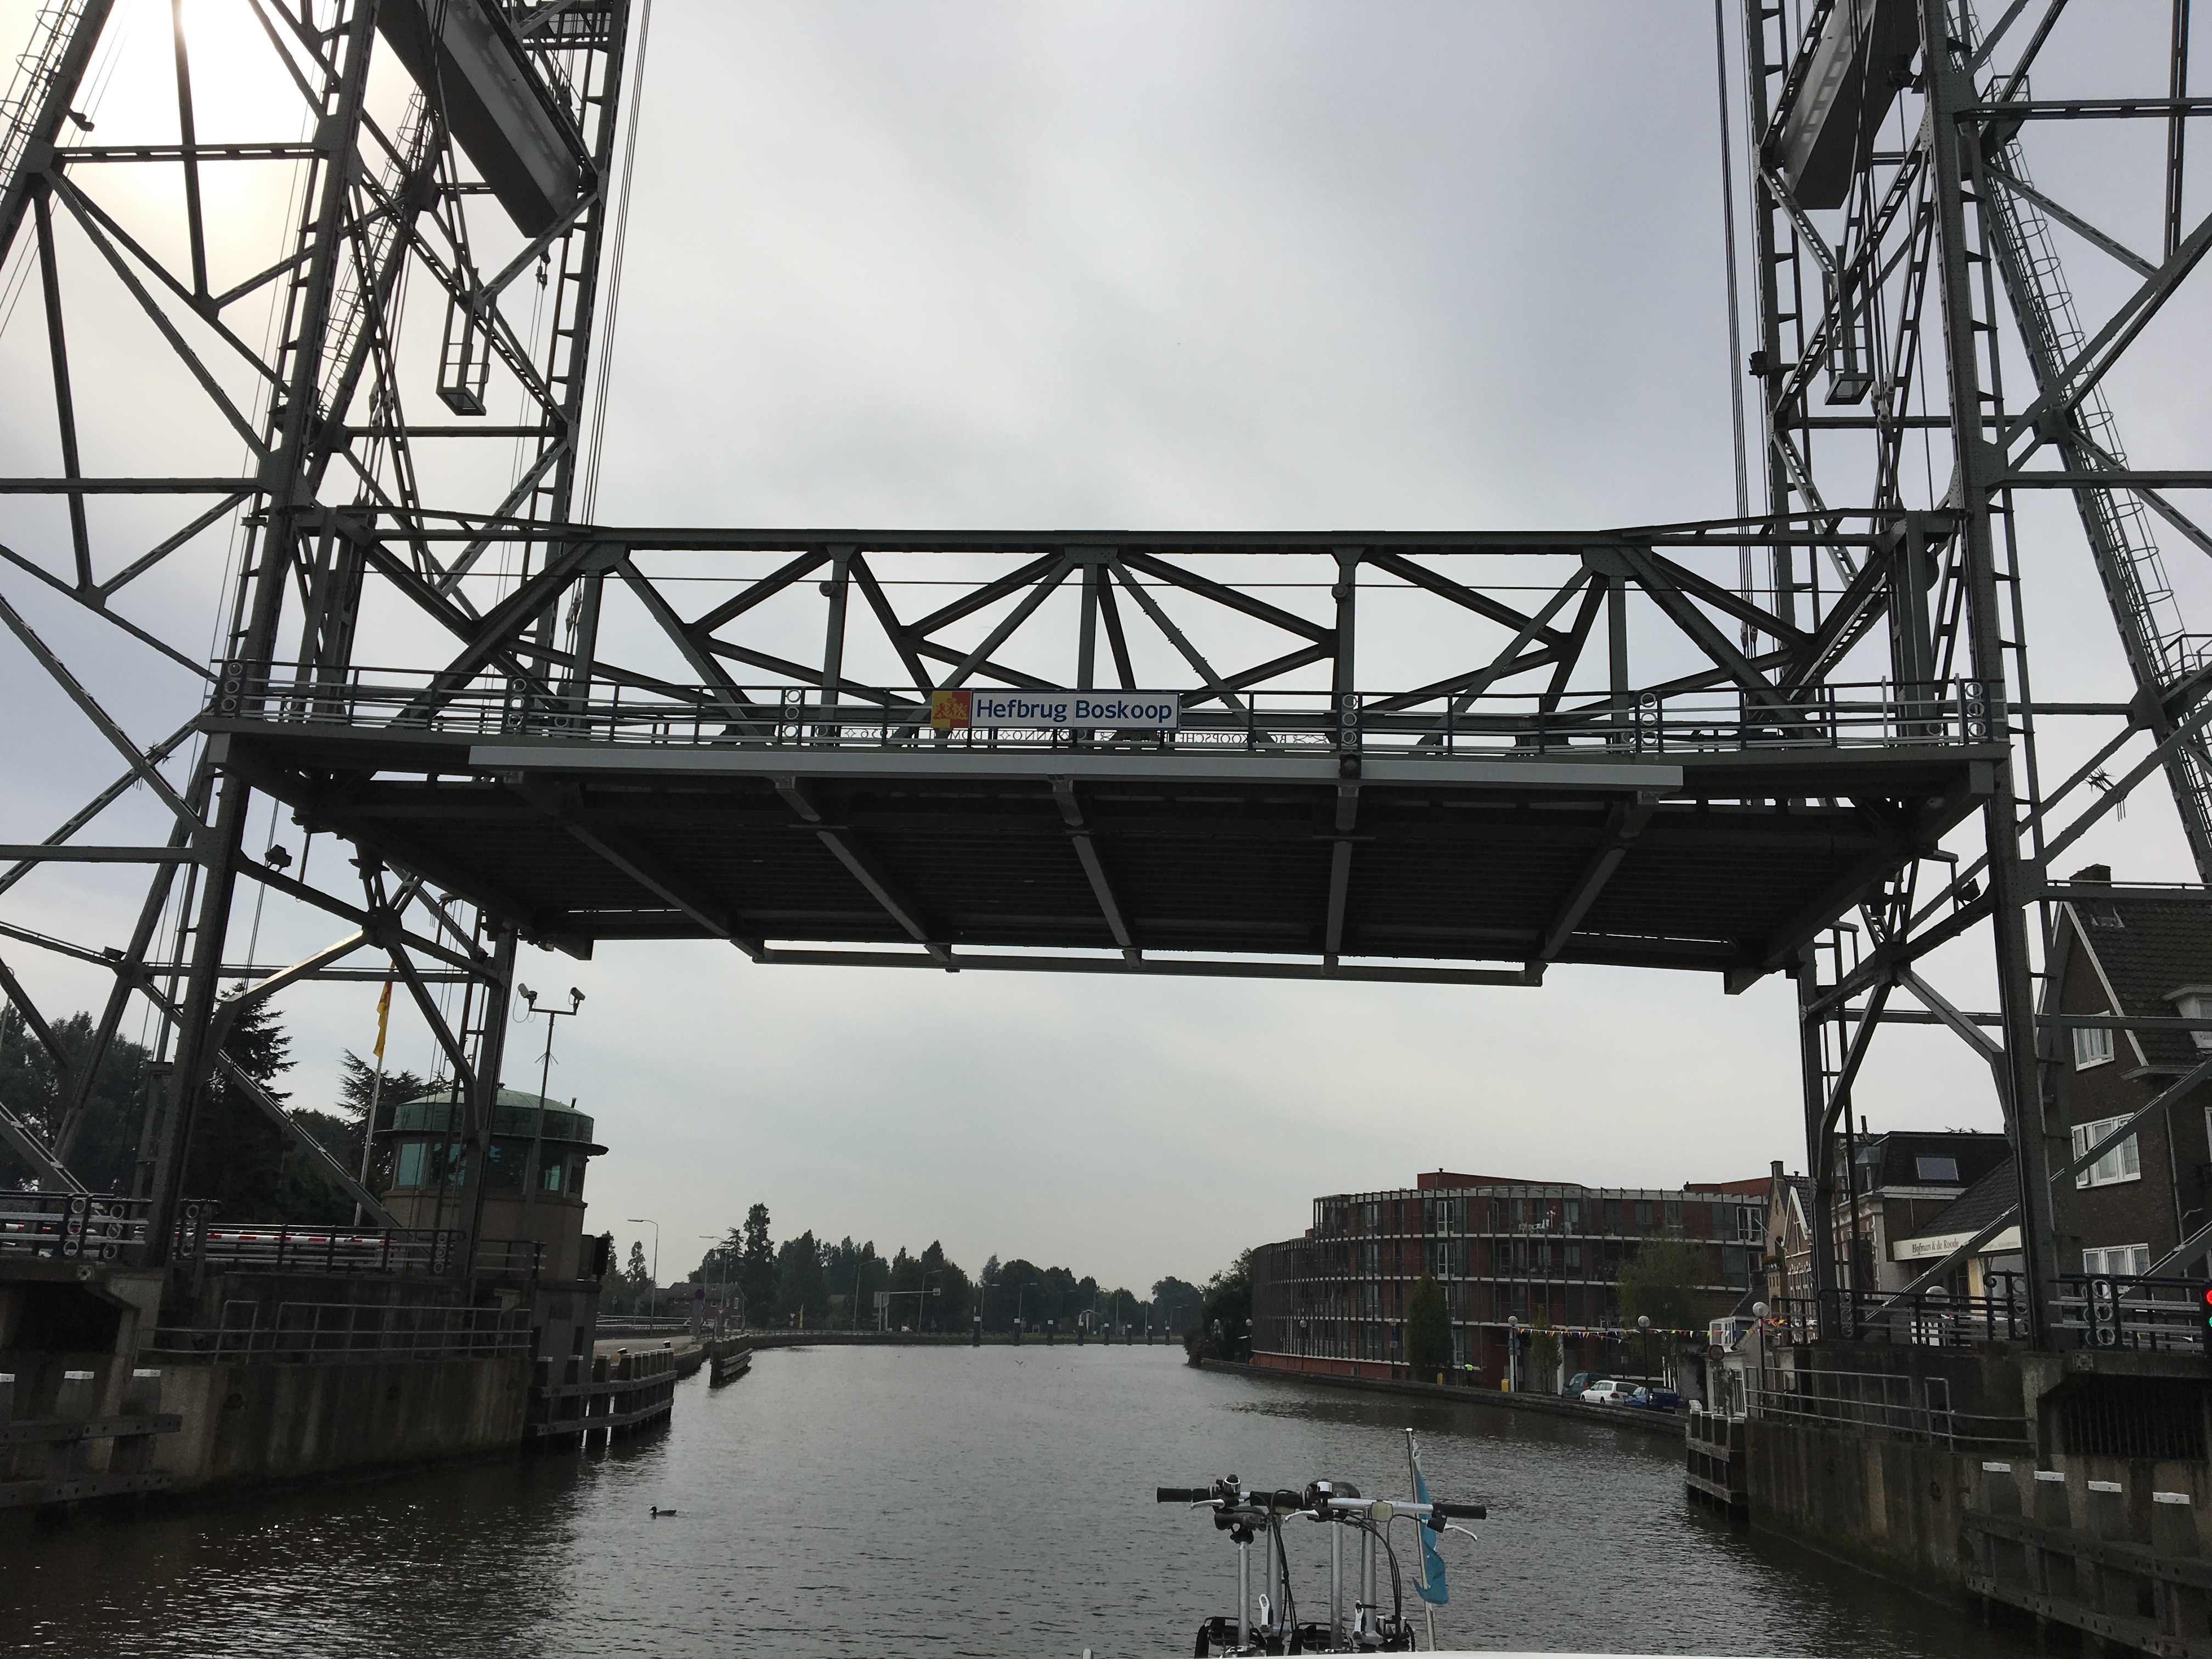 Lift Bridge on Canal near Amsterdam